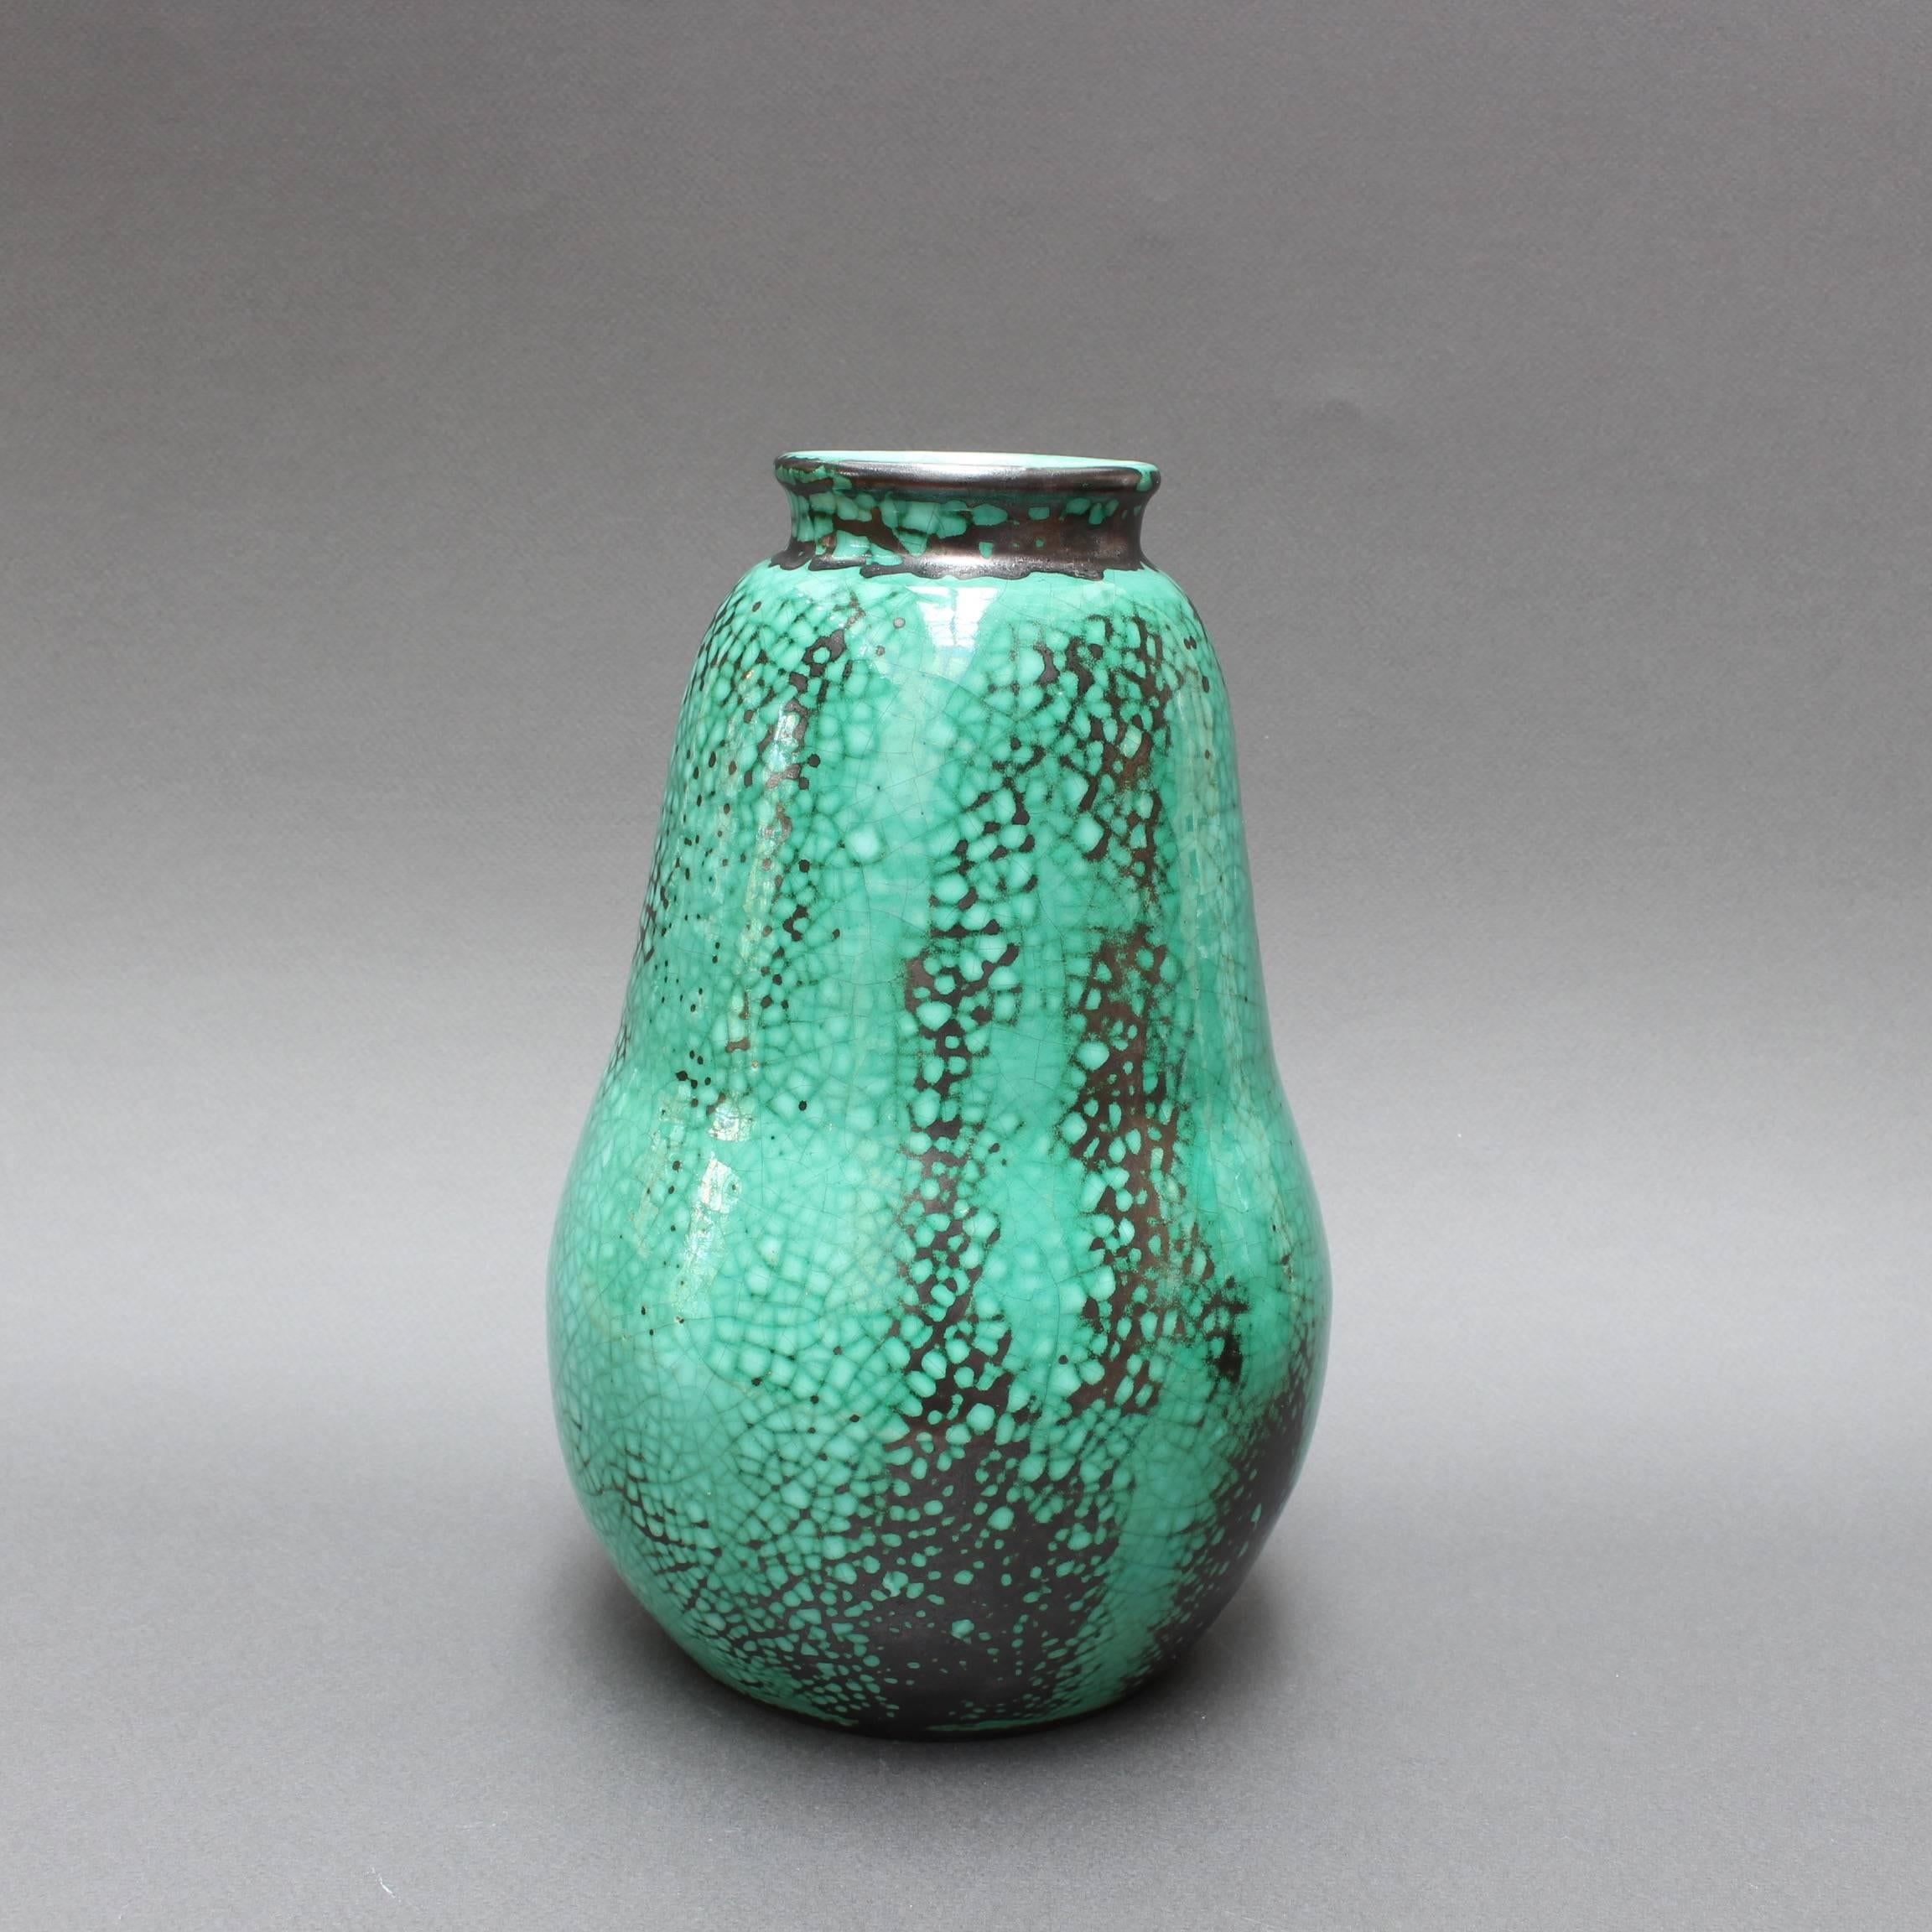 Art Deco Pear-Shaped Green and Black Ceramic Vase by Primavera, circa 1930s